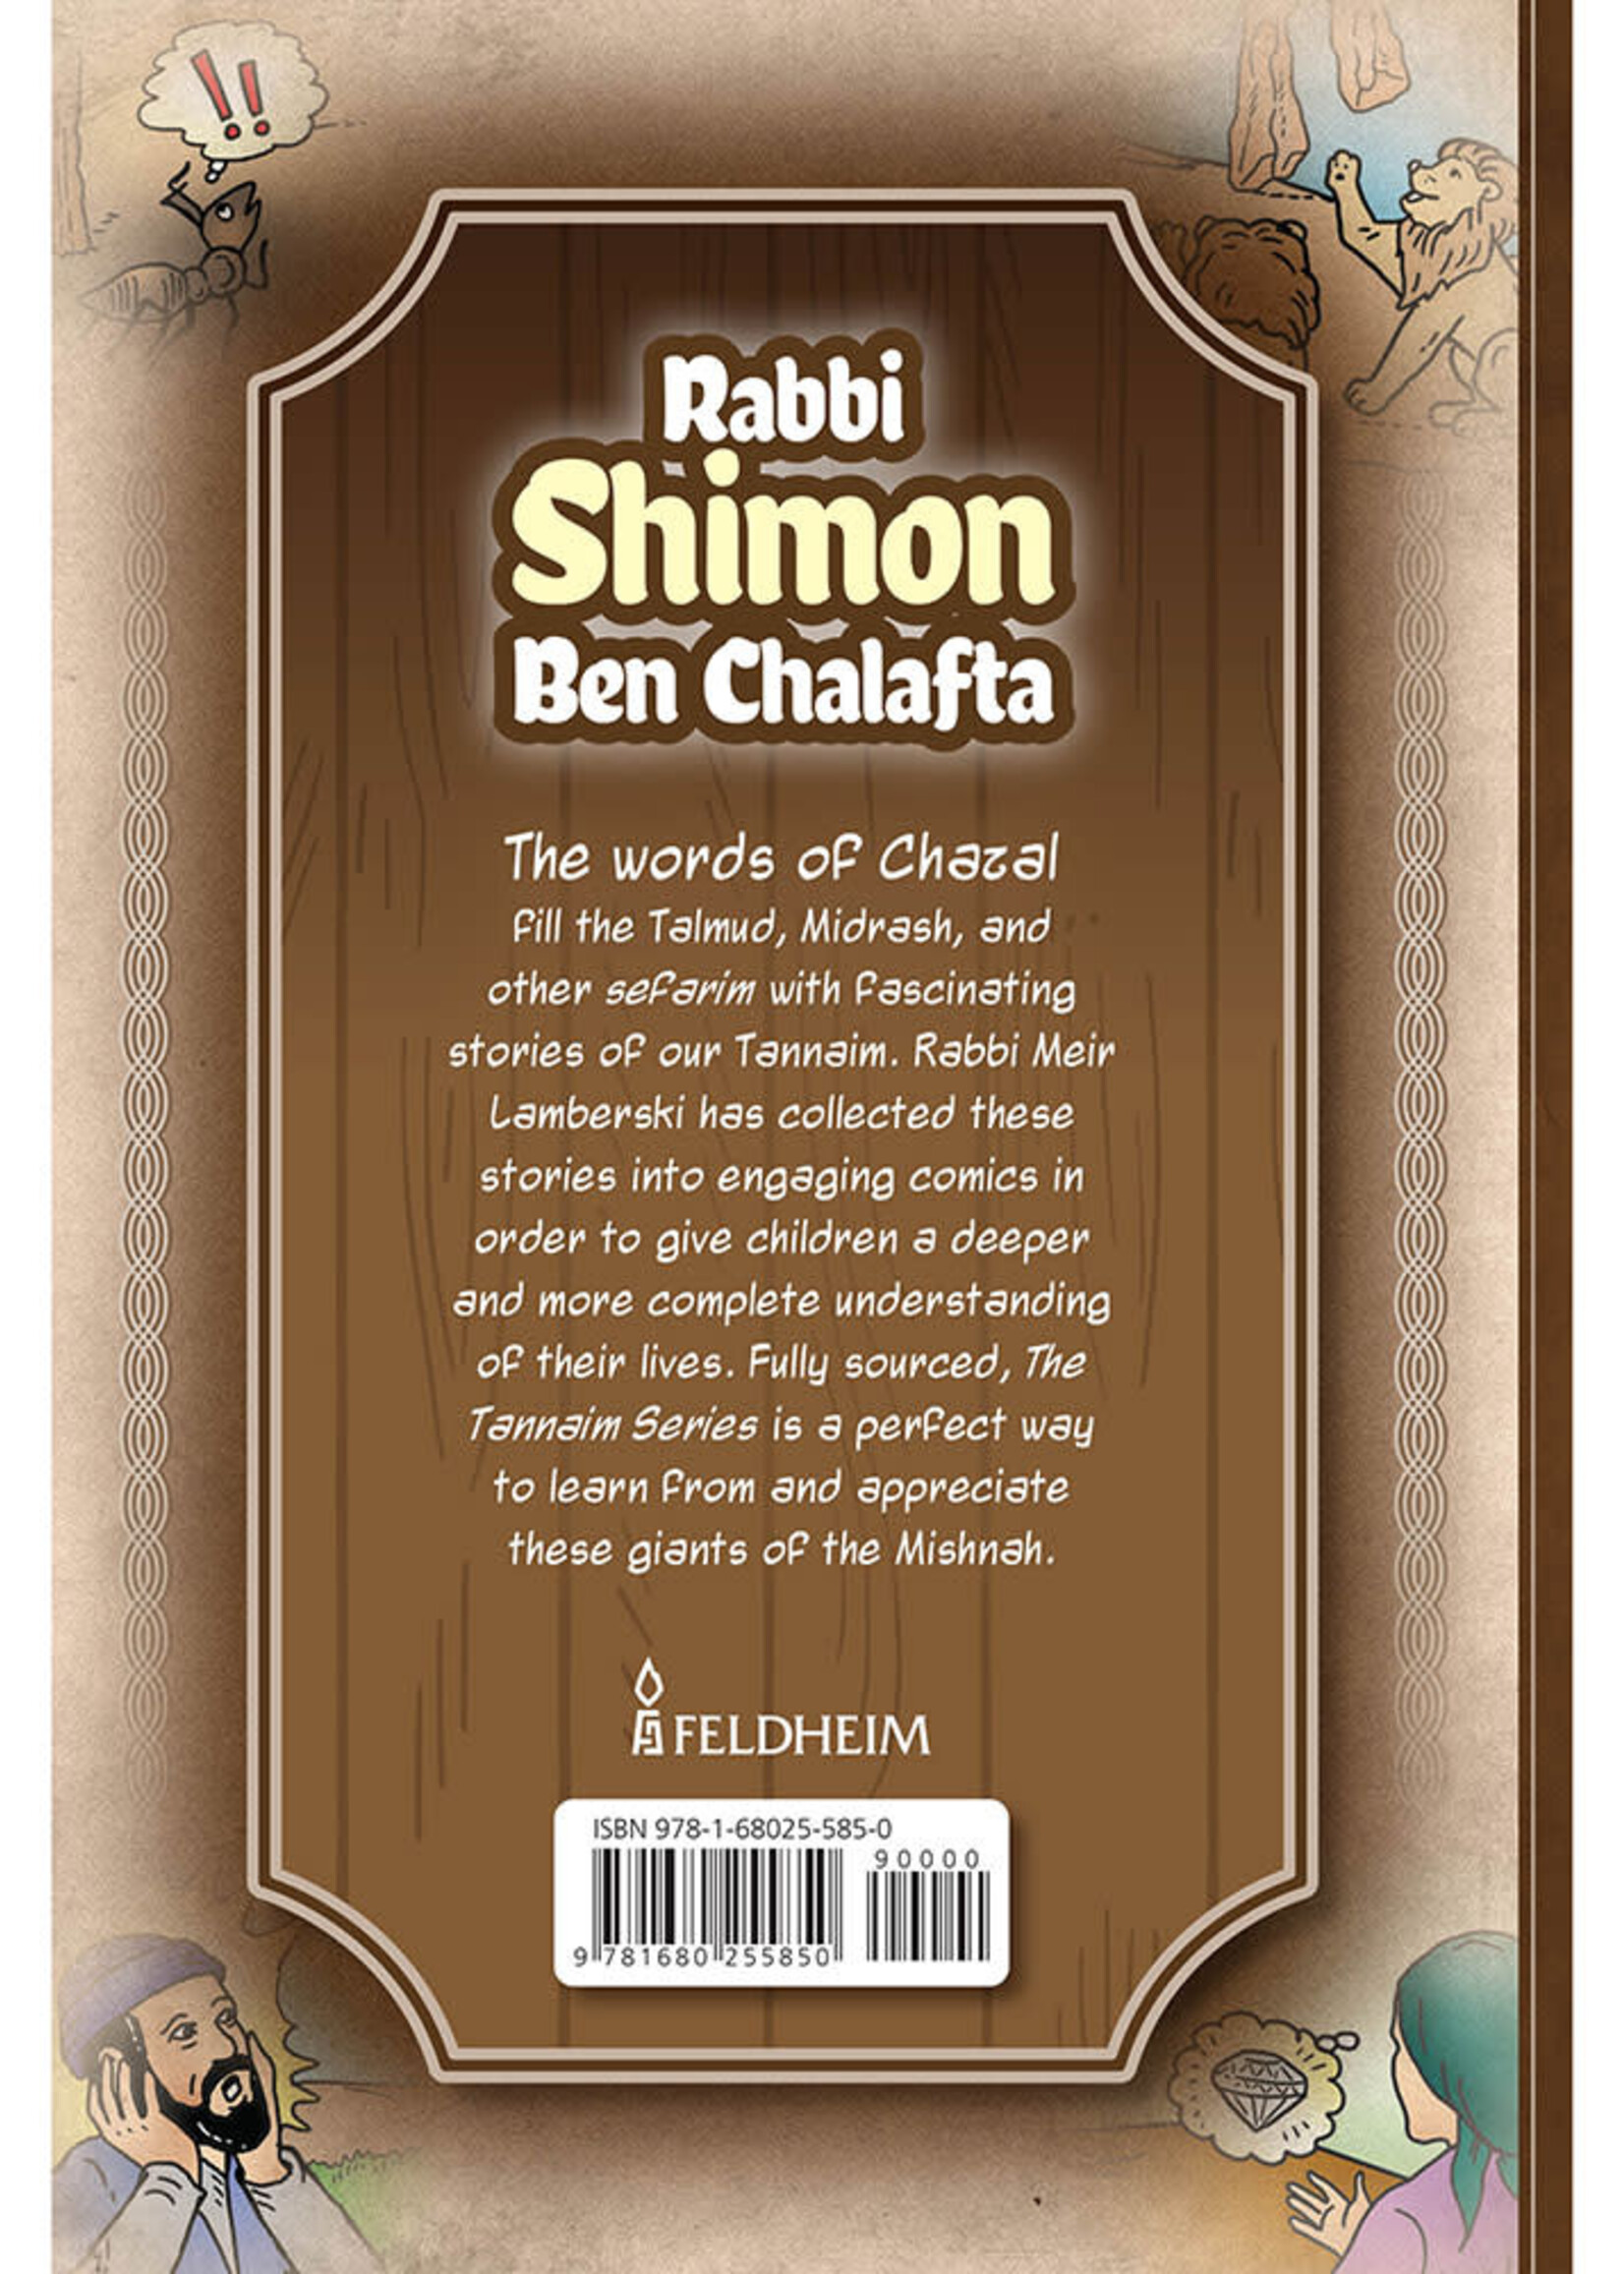 Tannaim Series: Rabbi Shimon ben Chalafta